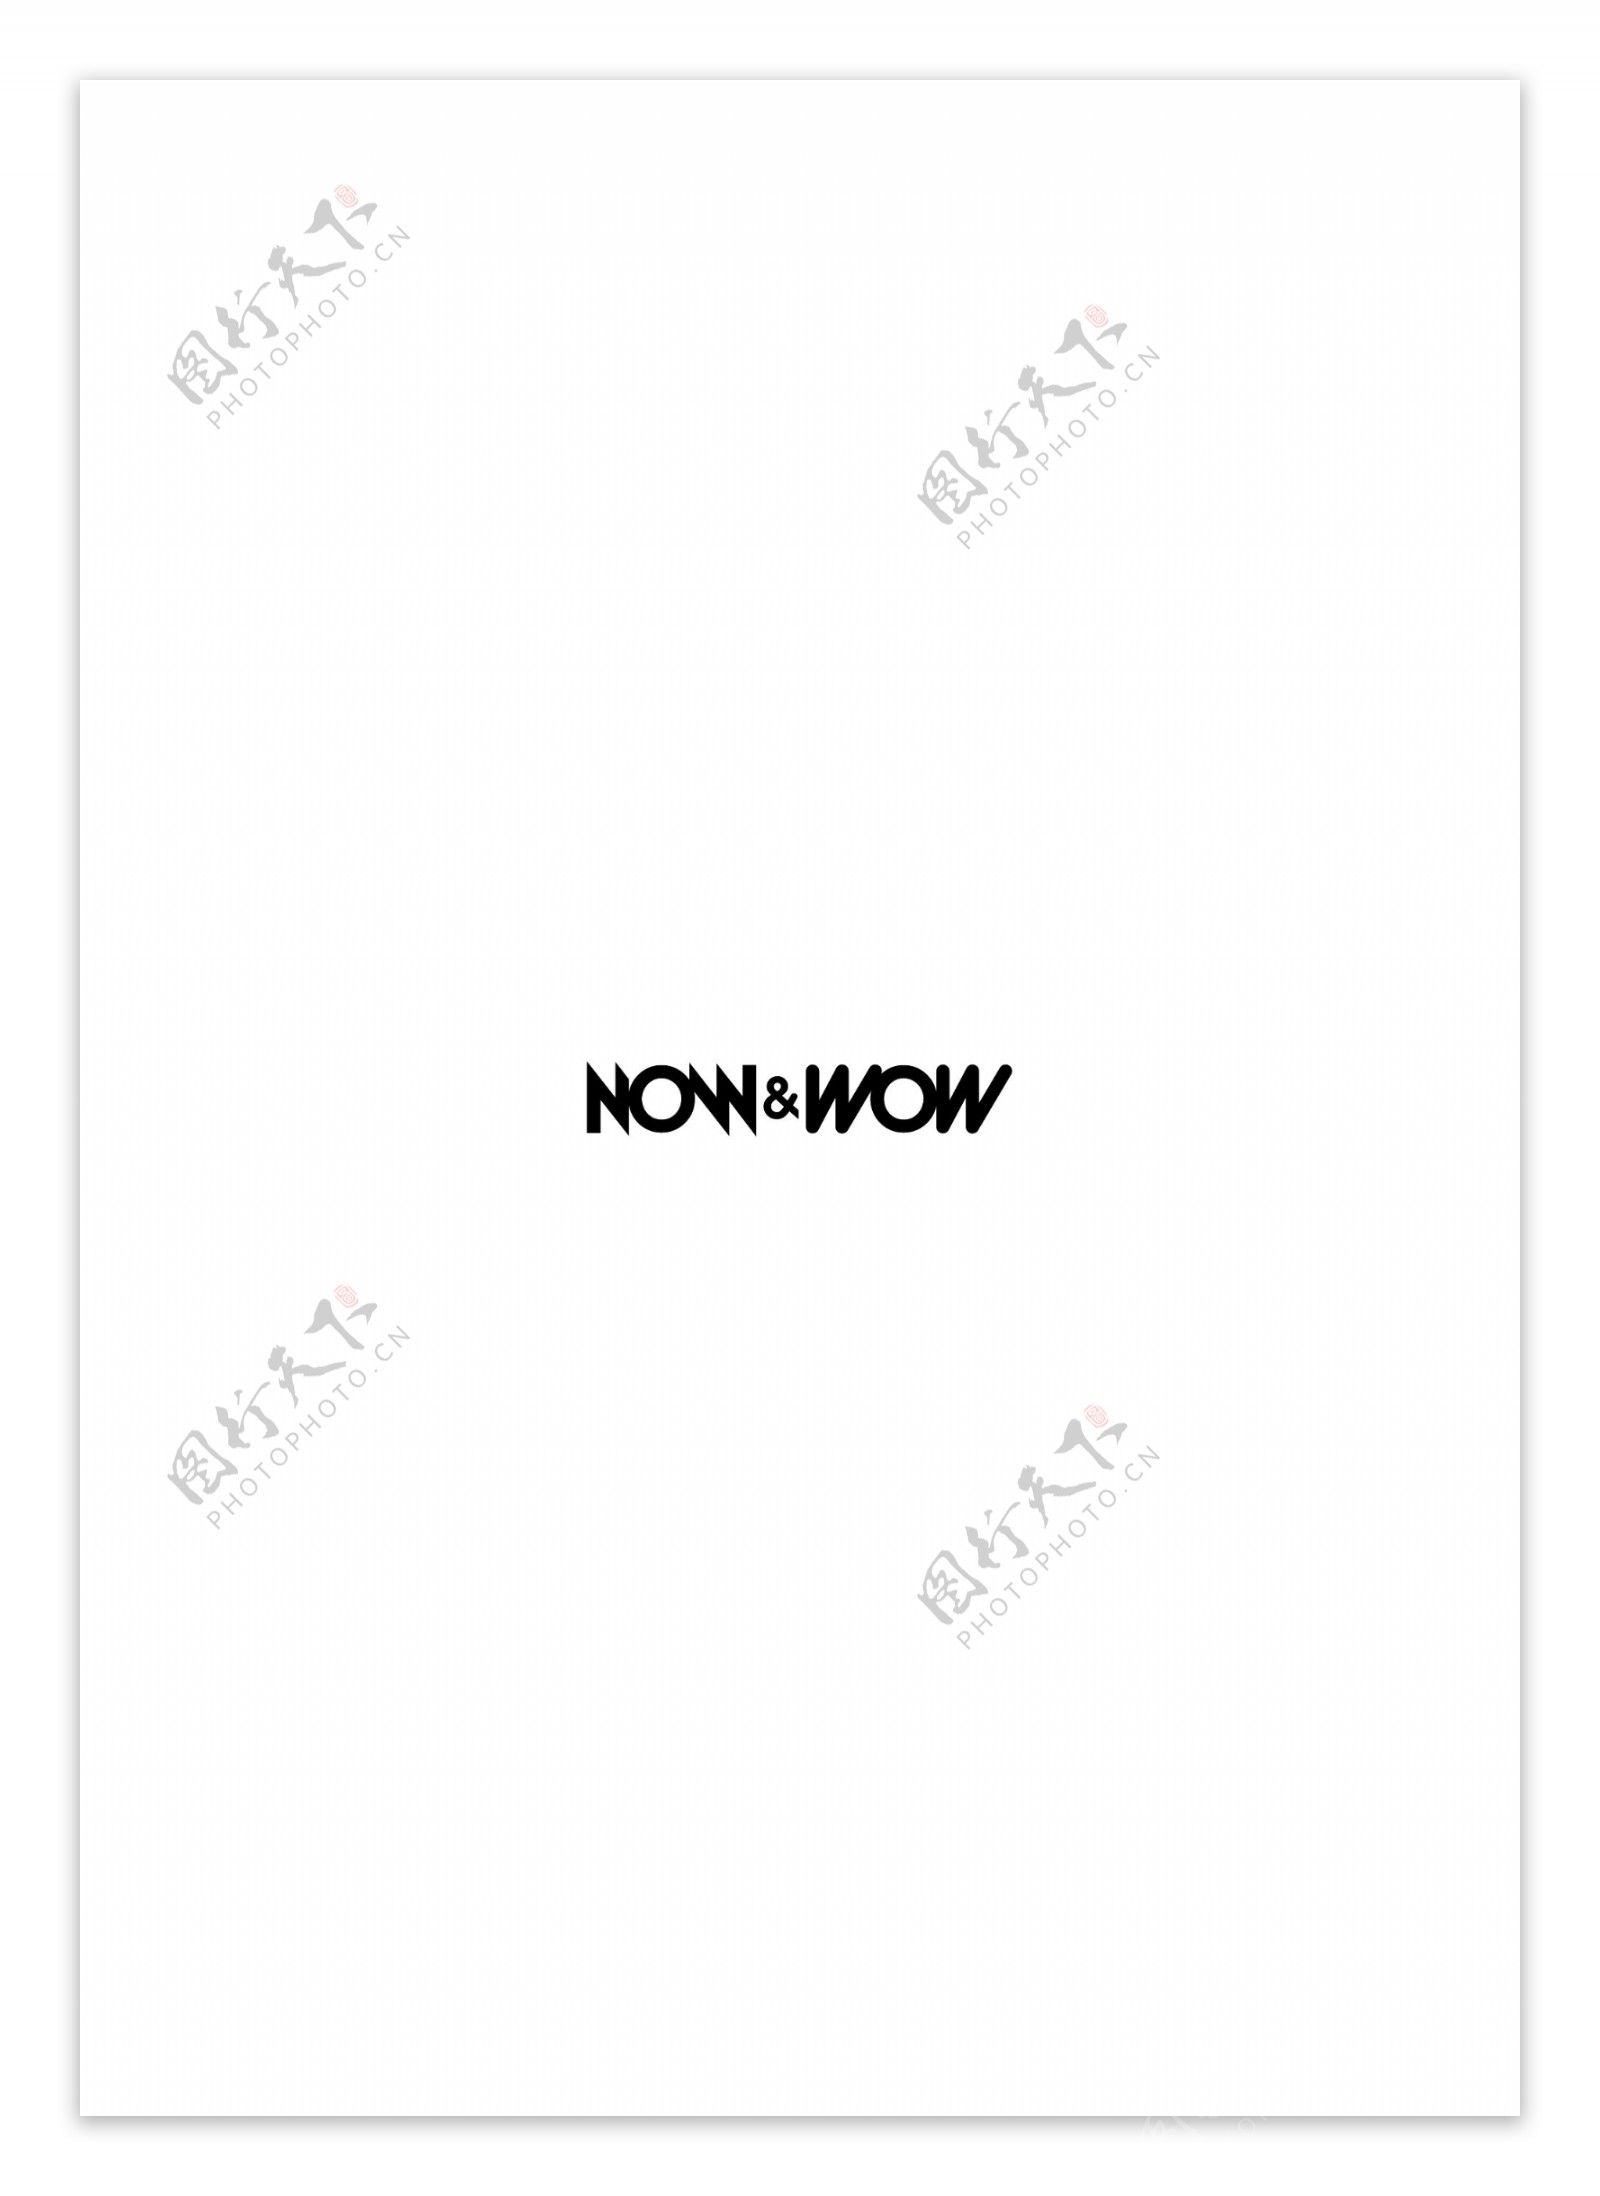 NowandWowlogo设计欣赏NowandWowCD唱片LOGO下载标志设计欣赏